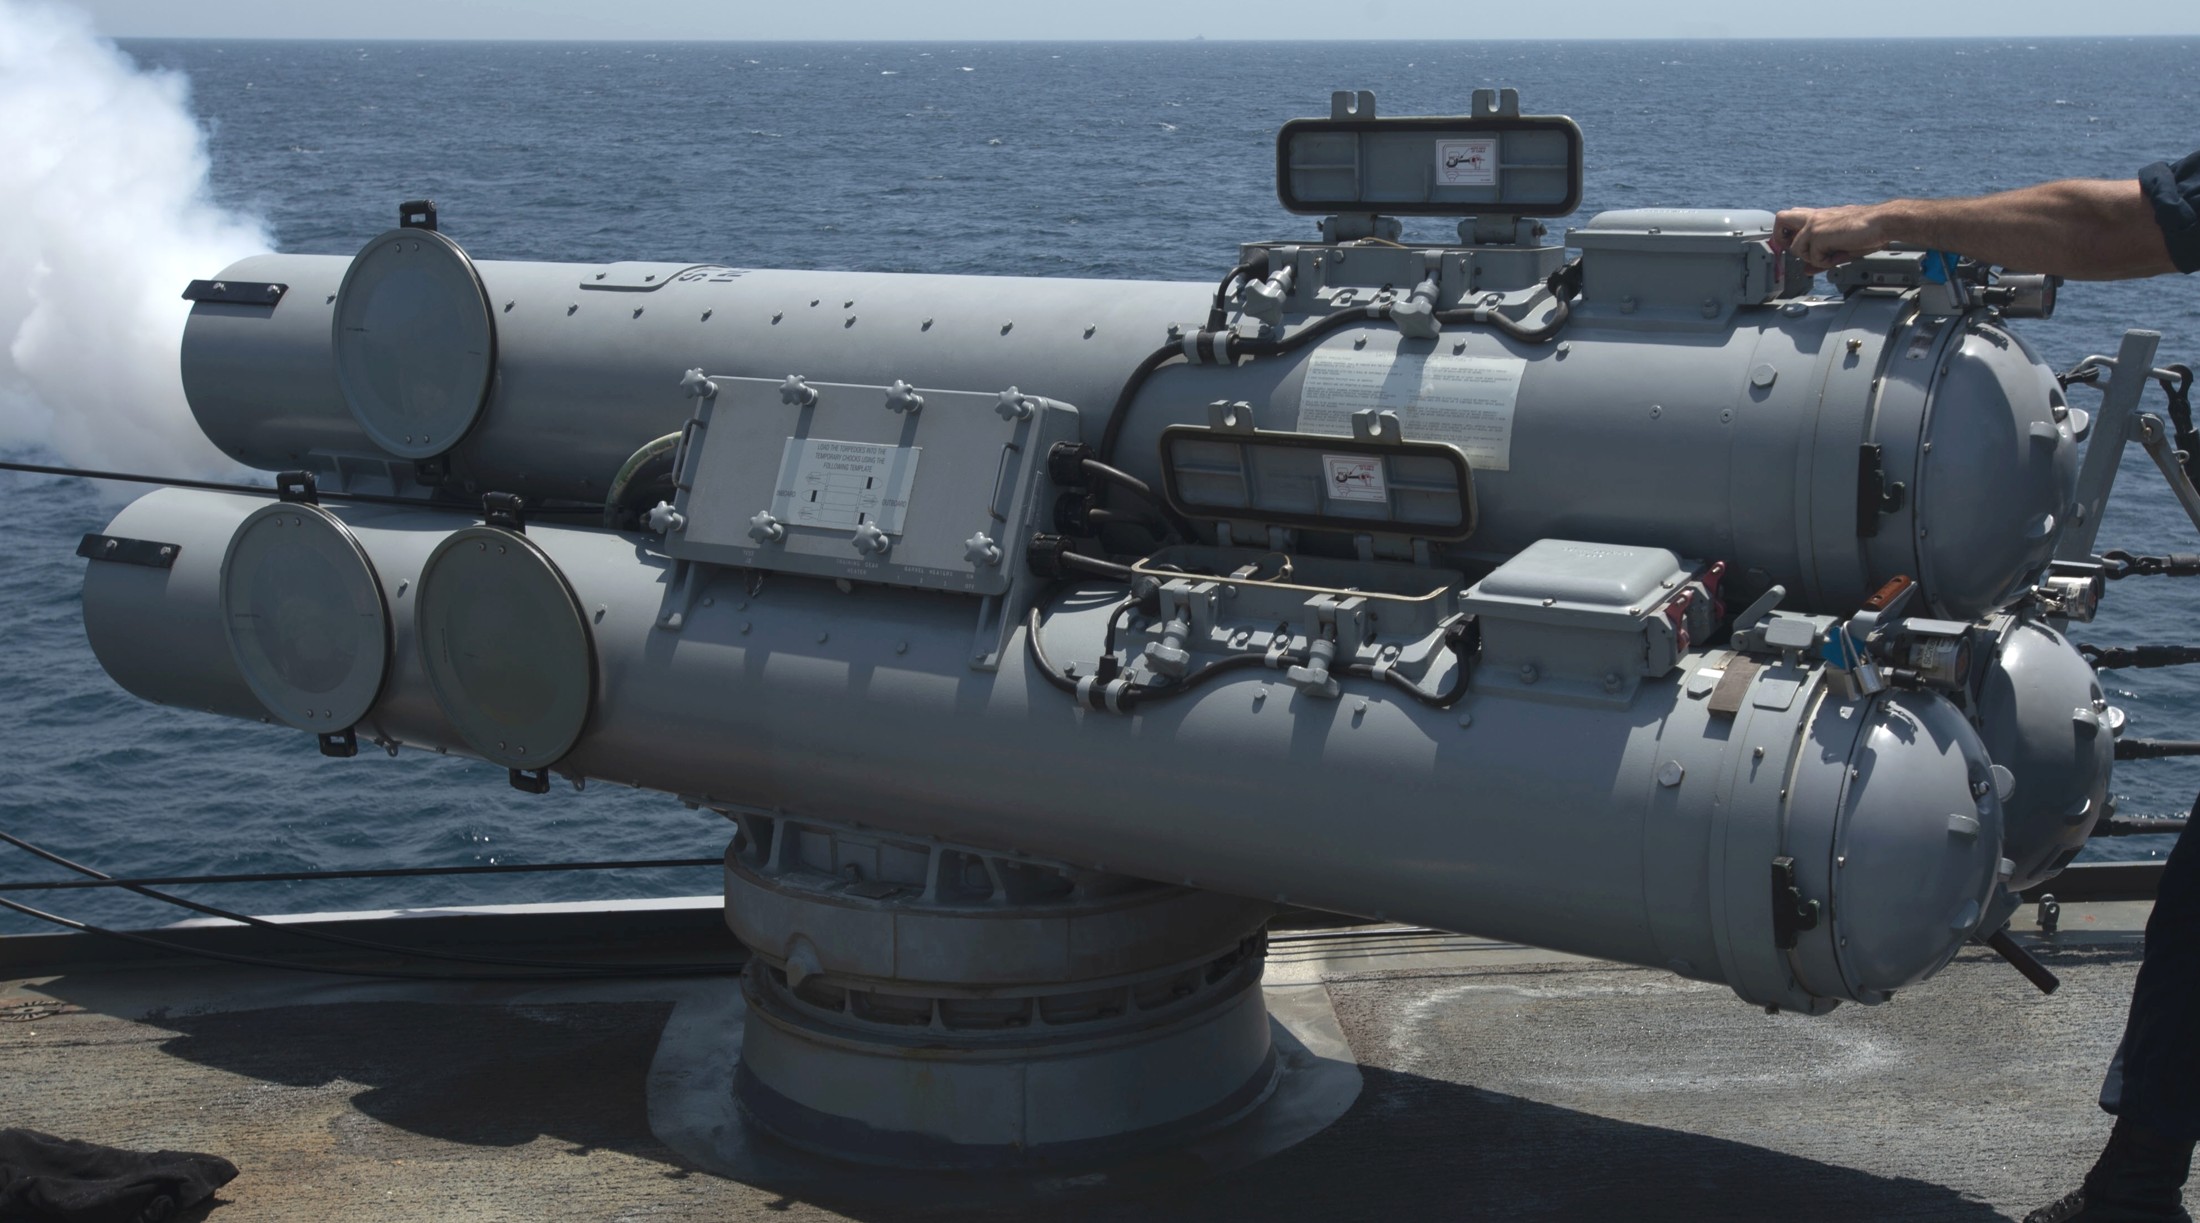 ddg-114 uss ralph johnson arleigh burke class guided missile destroyer us navy aegis 40 mk.32 torpedo tubes